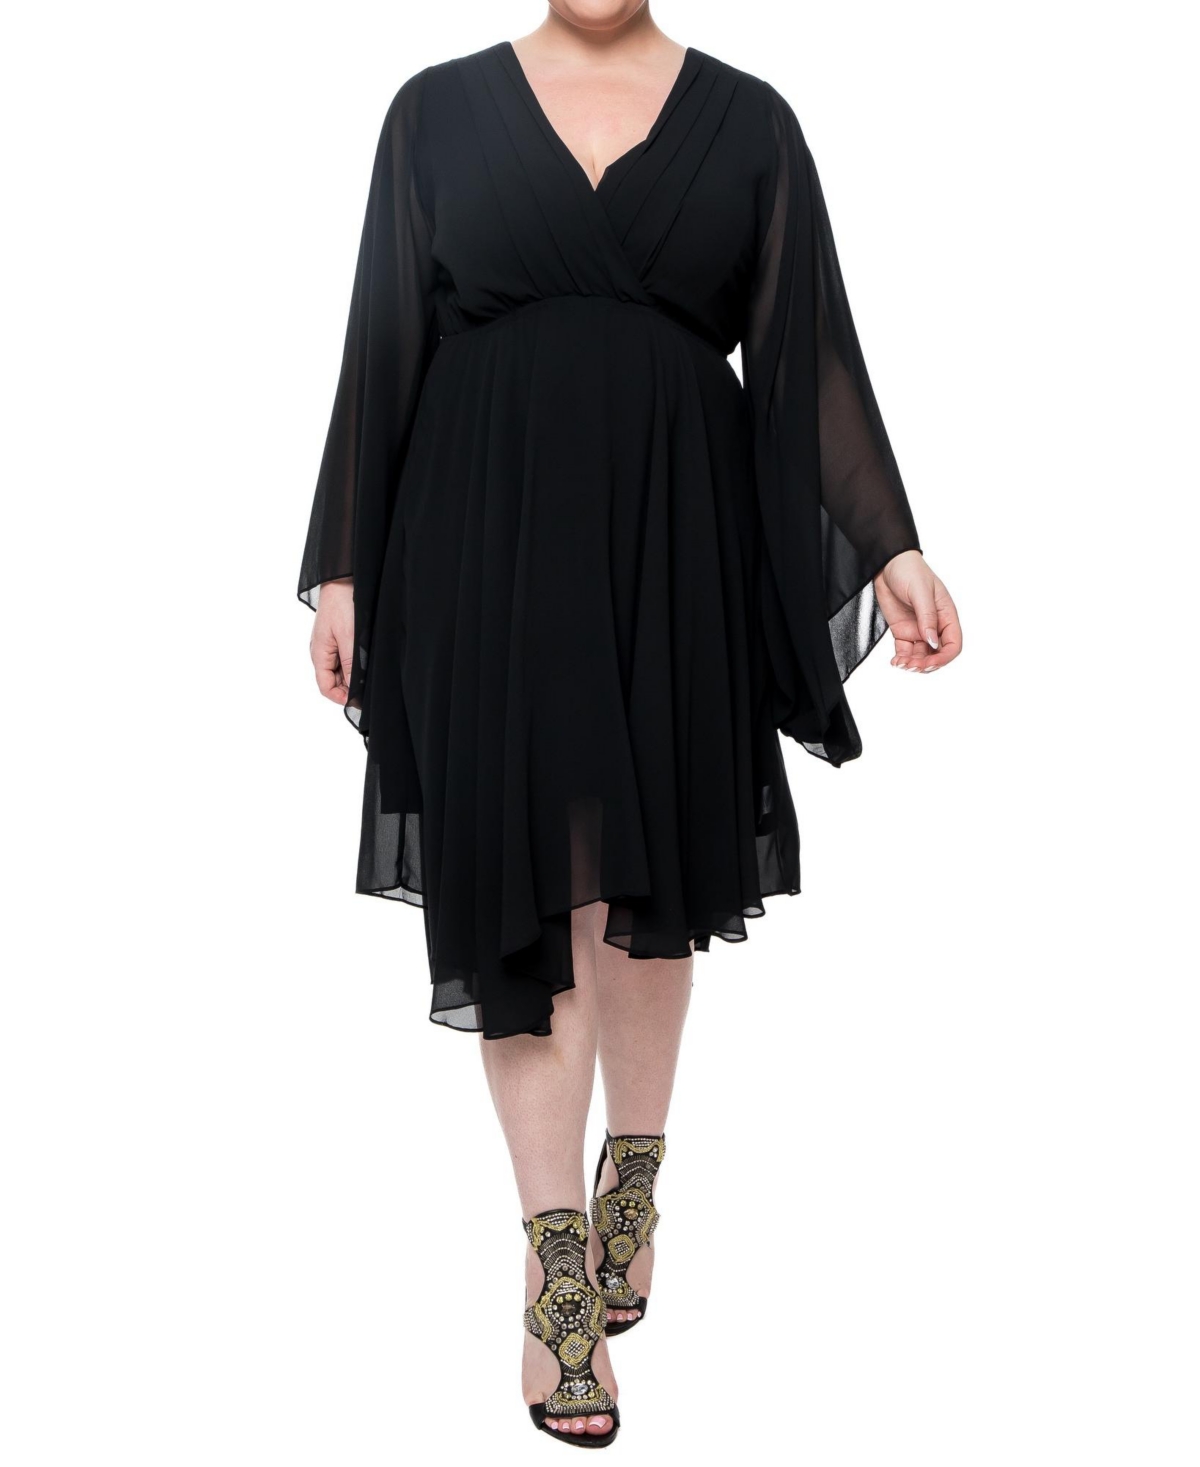 Plus Size Sunset Dress - Dahlia black